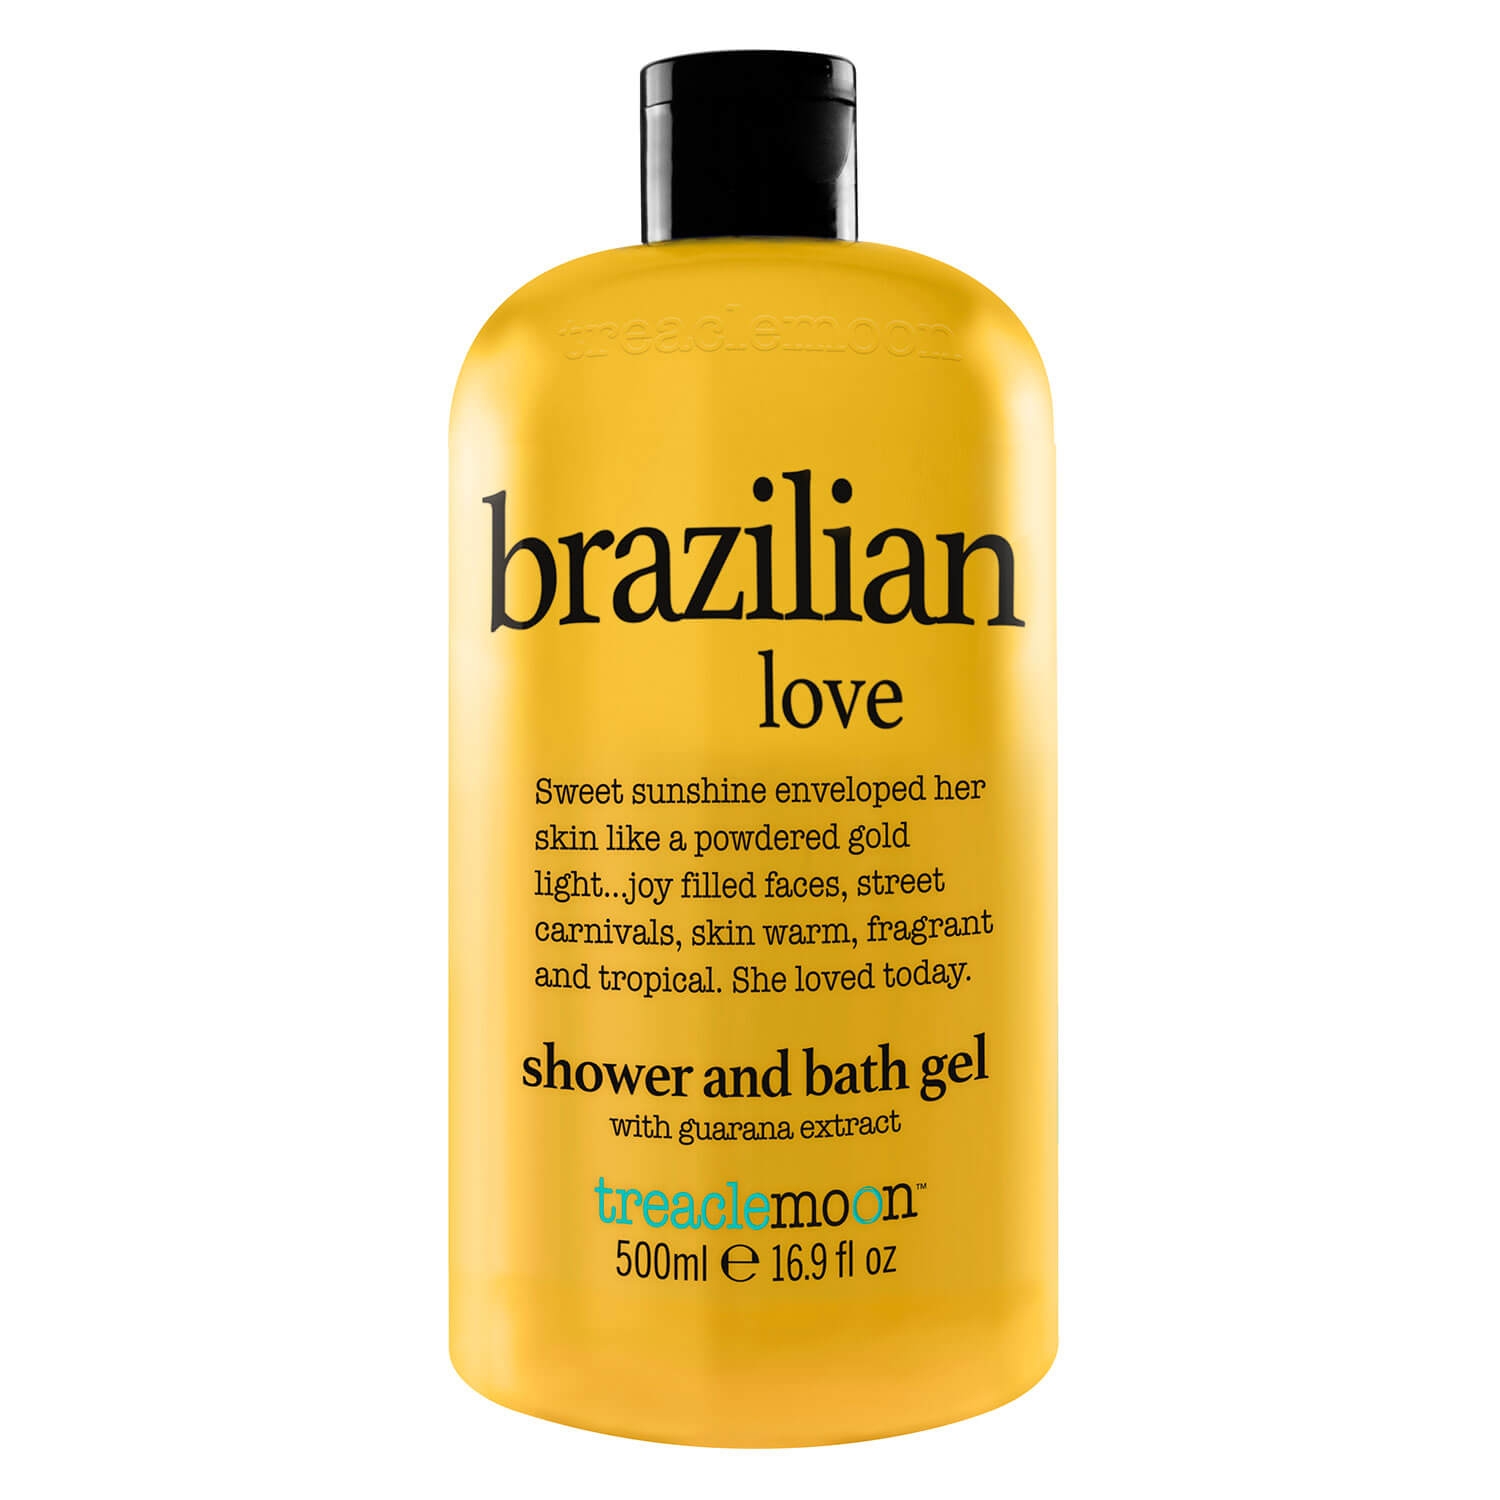 Produktbild von treaclemoon - brazilian love shower and bath gel